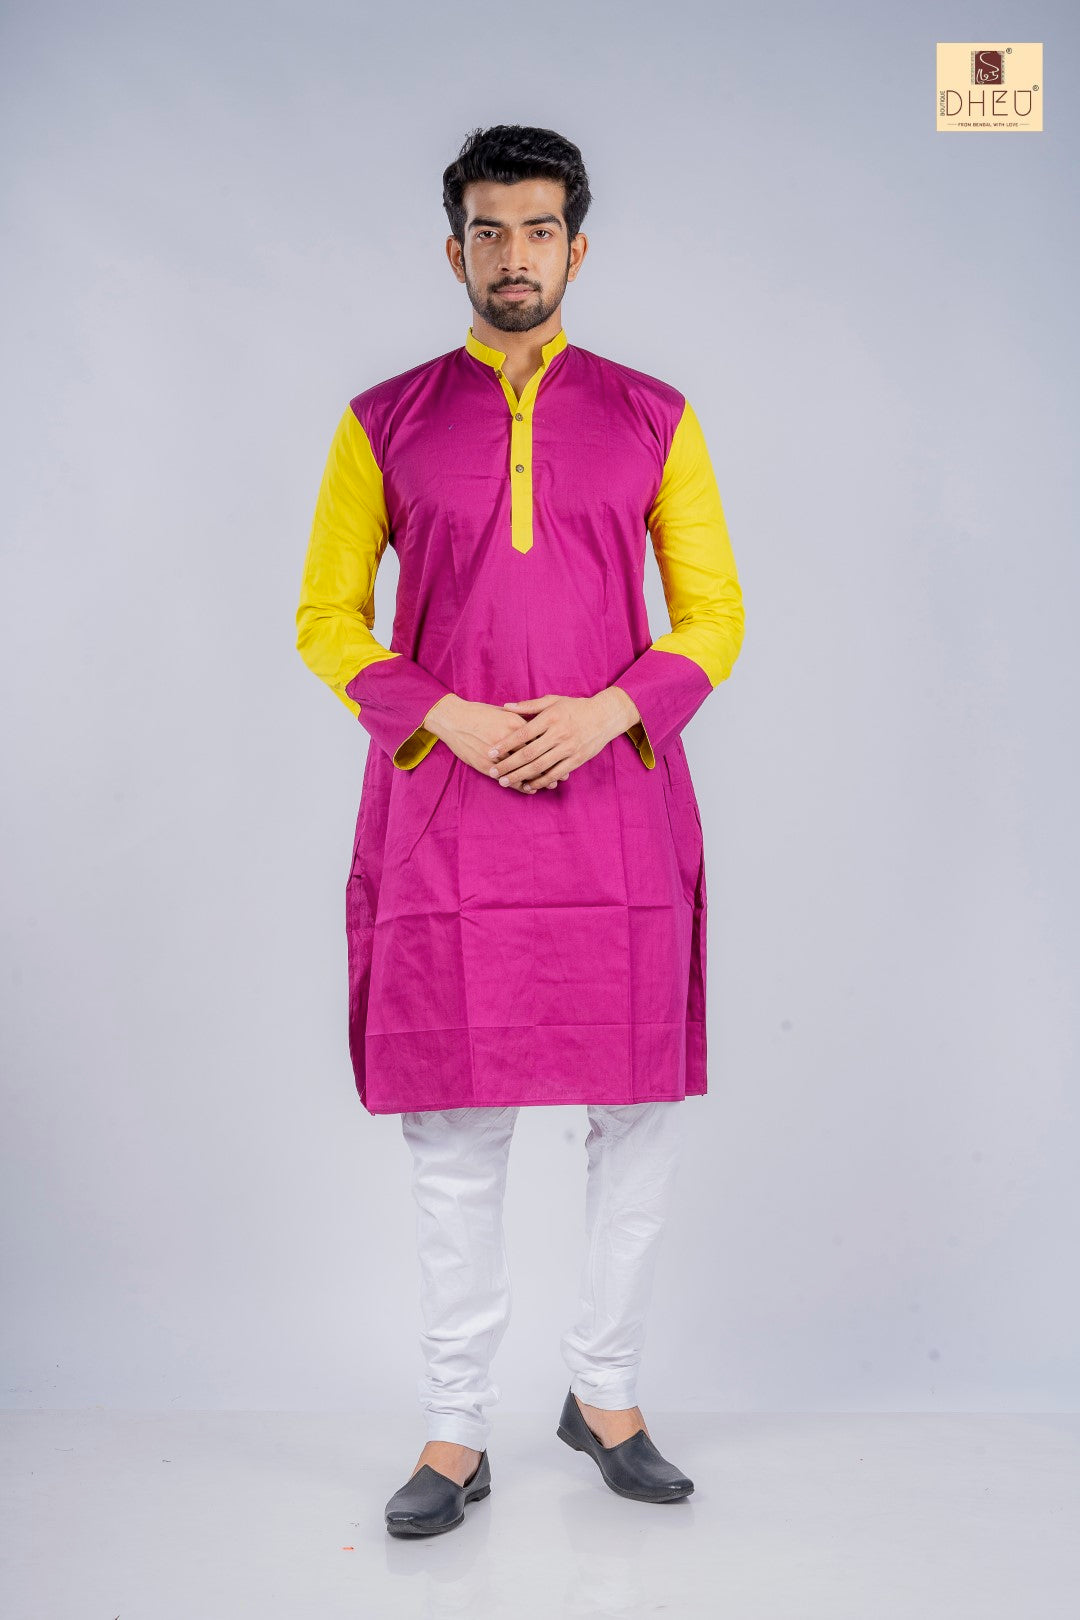 Vibrant purple-yellow designer kurta at low cost in dheu.in